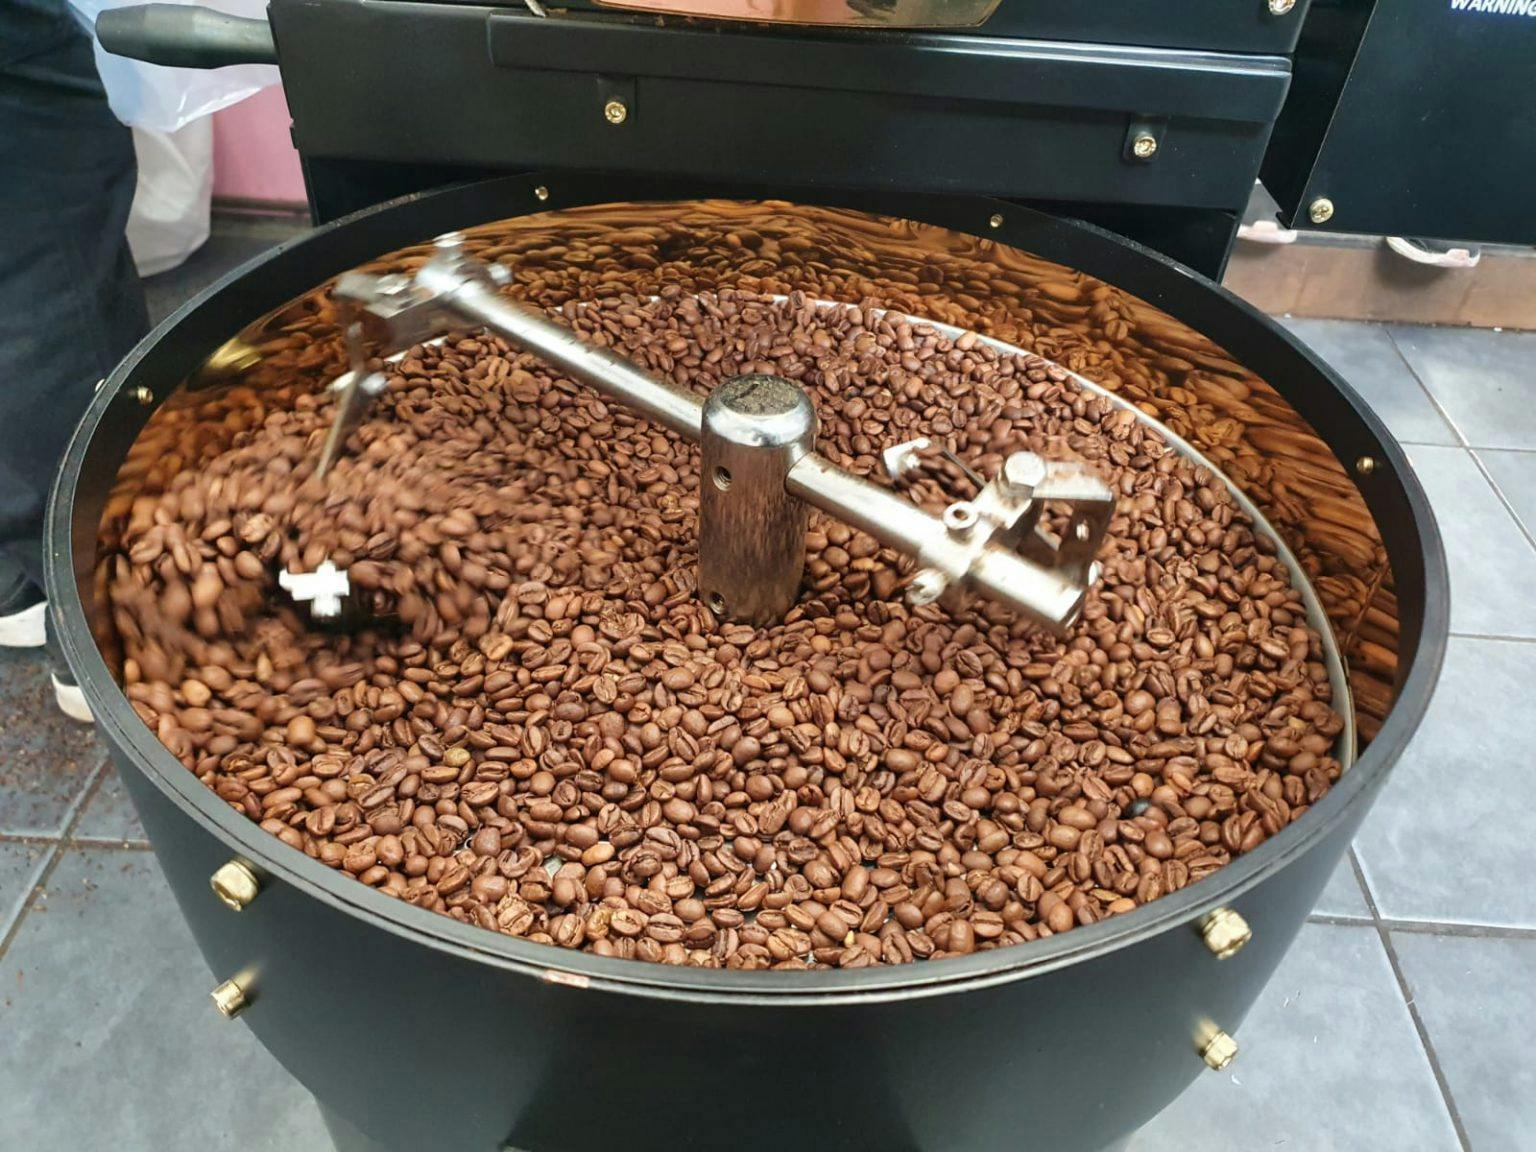 Image of roasting beans